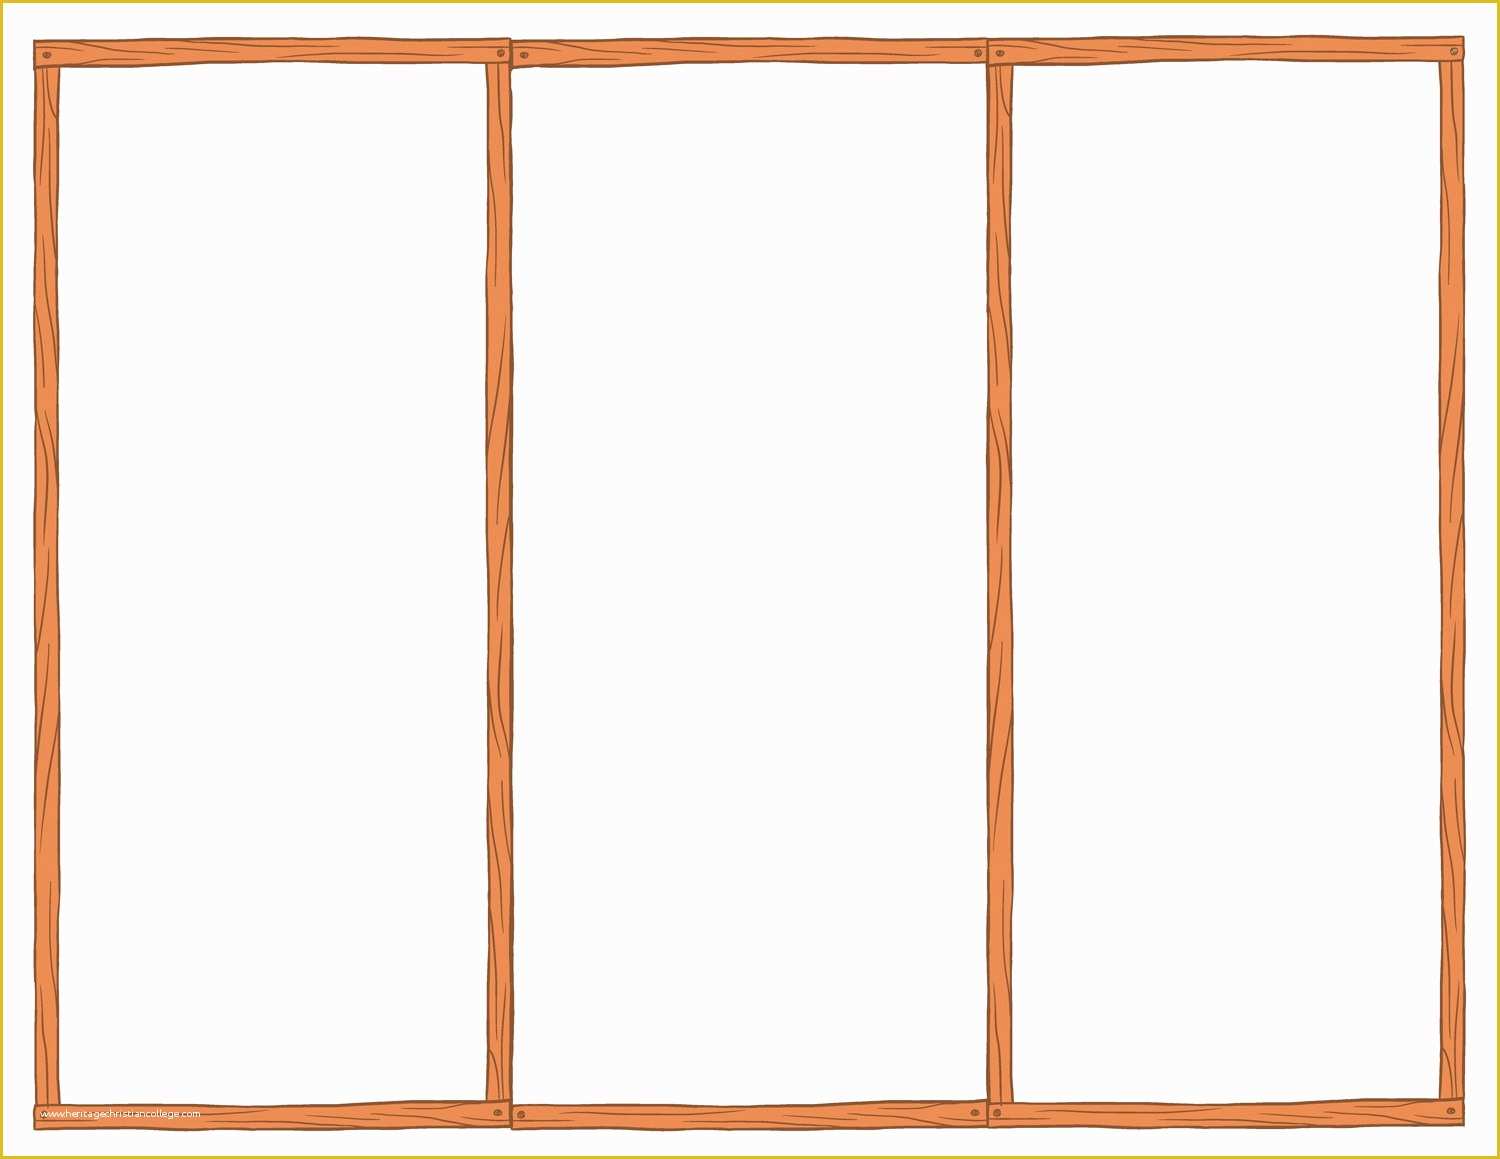 Publisher Tri Fold Brochure Templates Free Of 10 Blank Tri Fold Brochure Template Free Blank